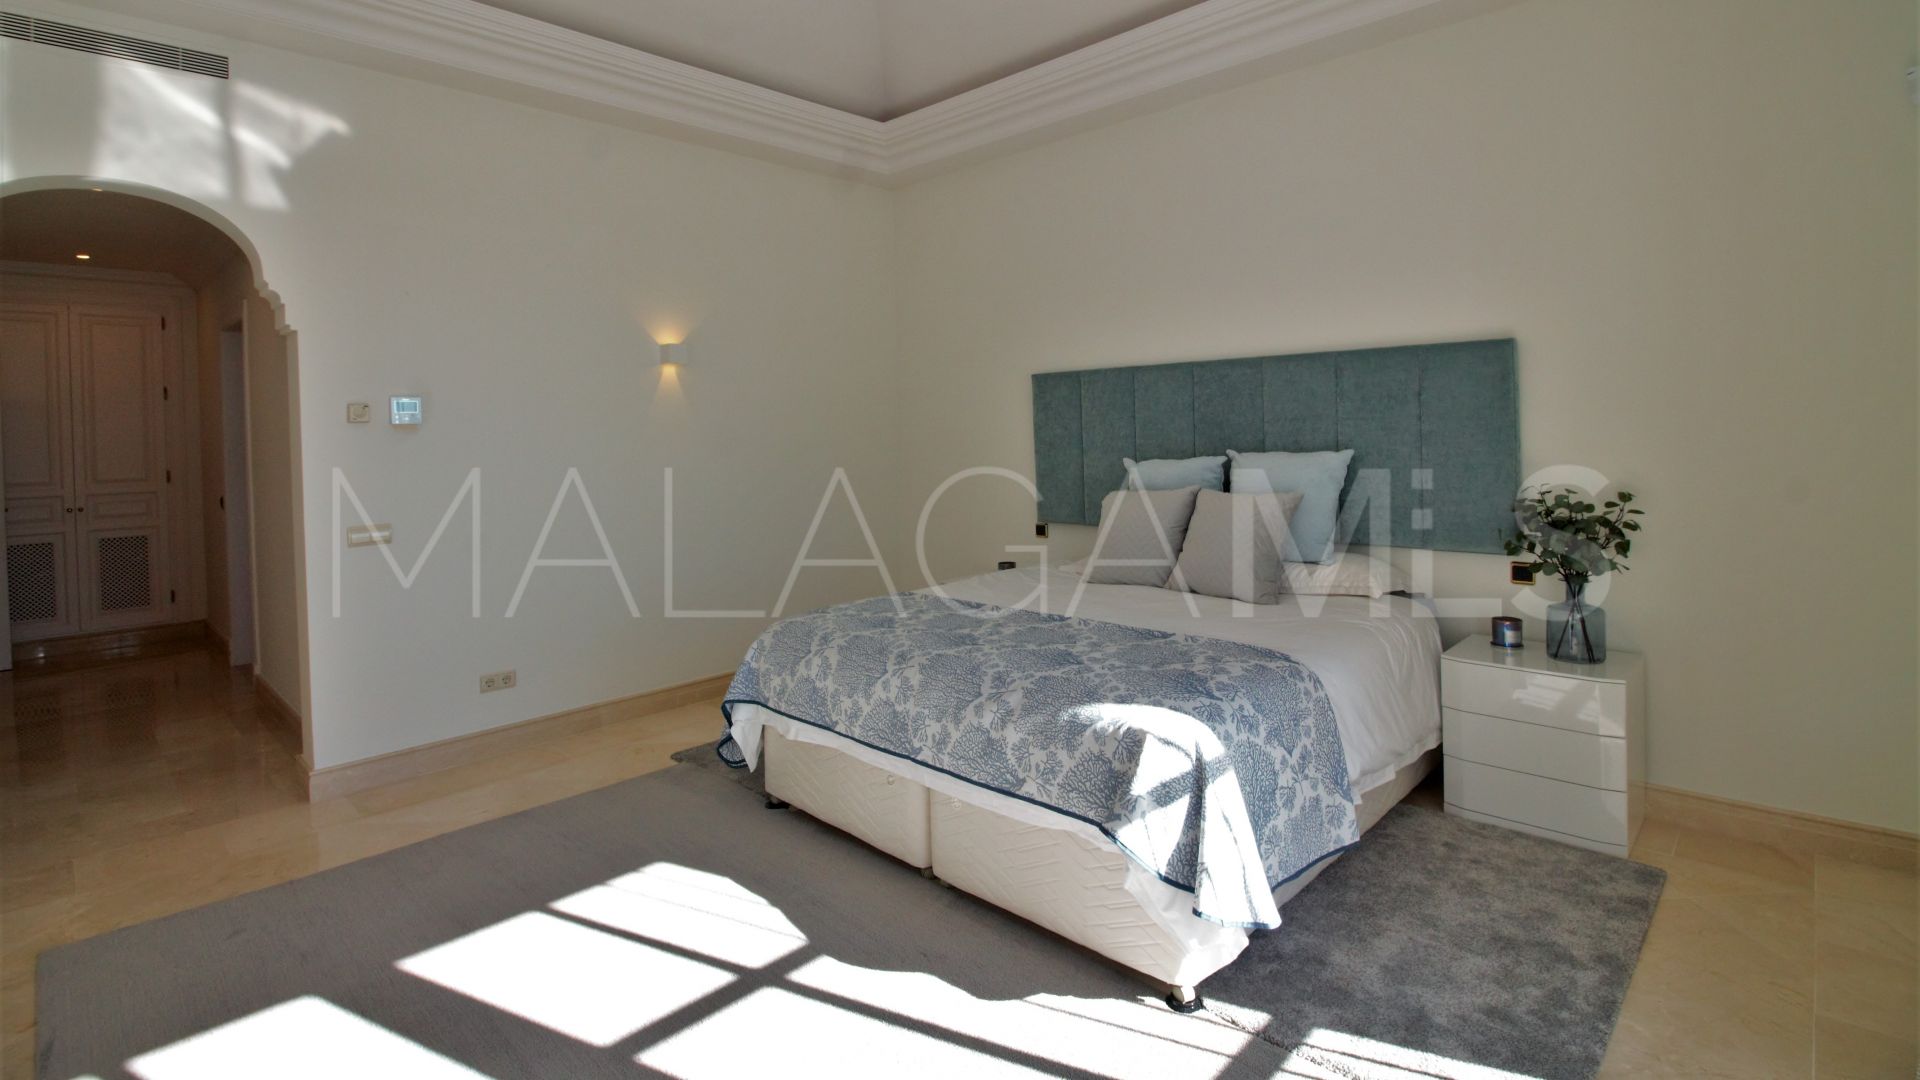 For sale villa in La Zagaleta with 6 bedrooms